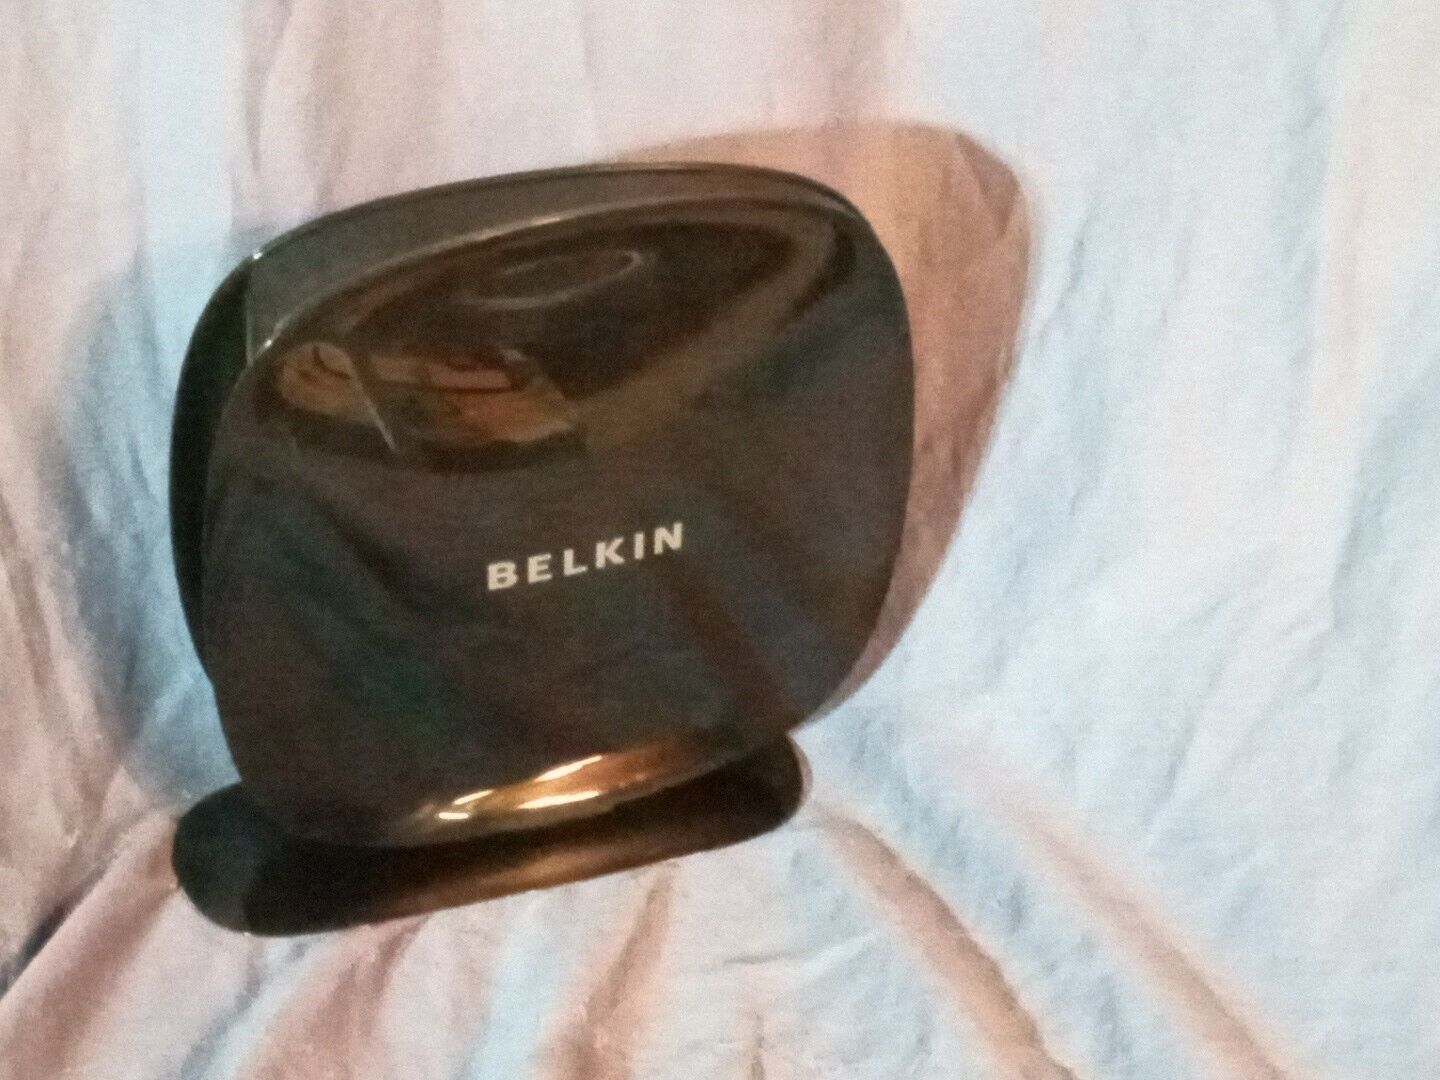 BELKIN - F9K1106v1 - N600 Dual Band Wi-Fi Range Extender